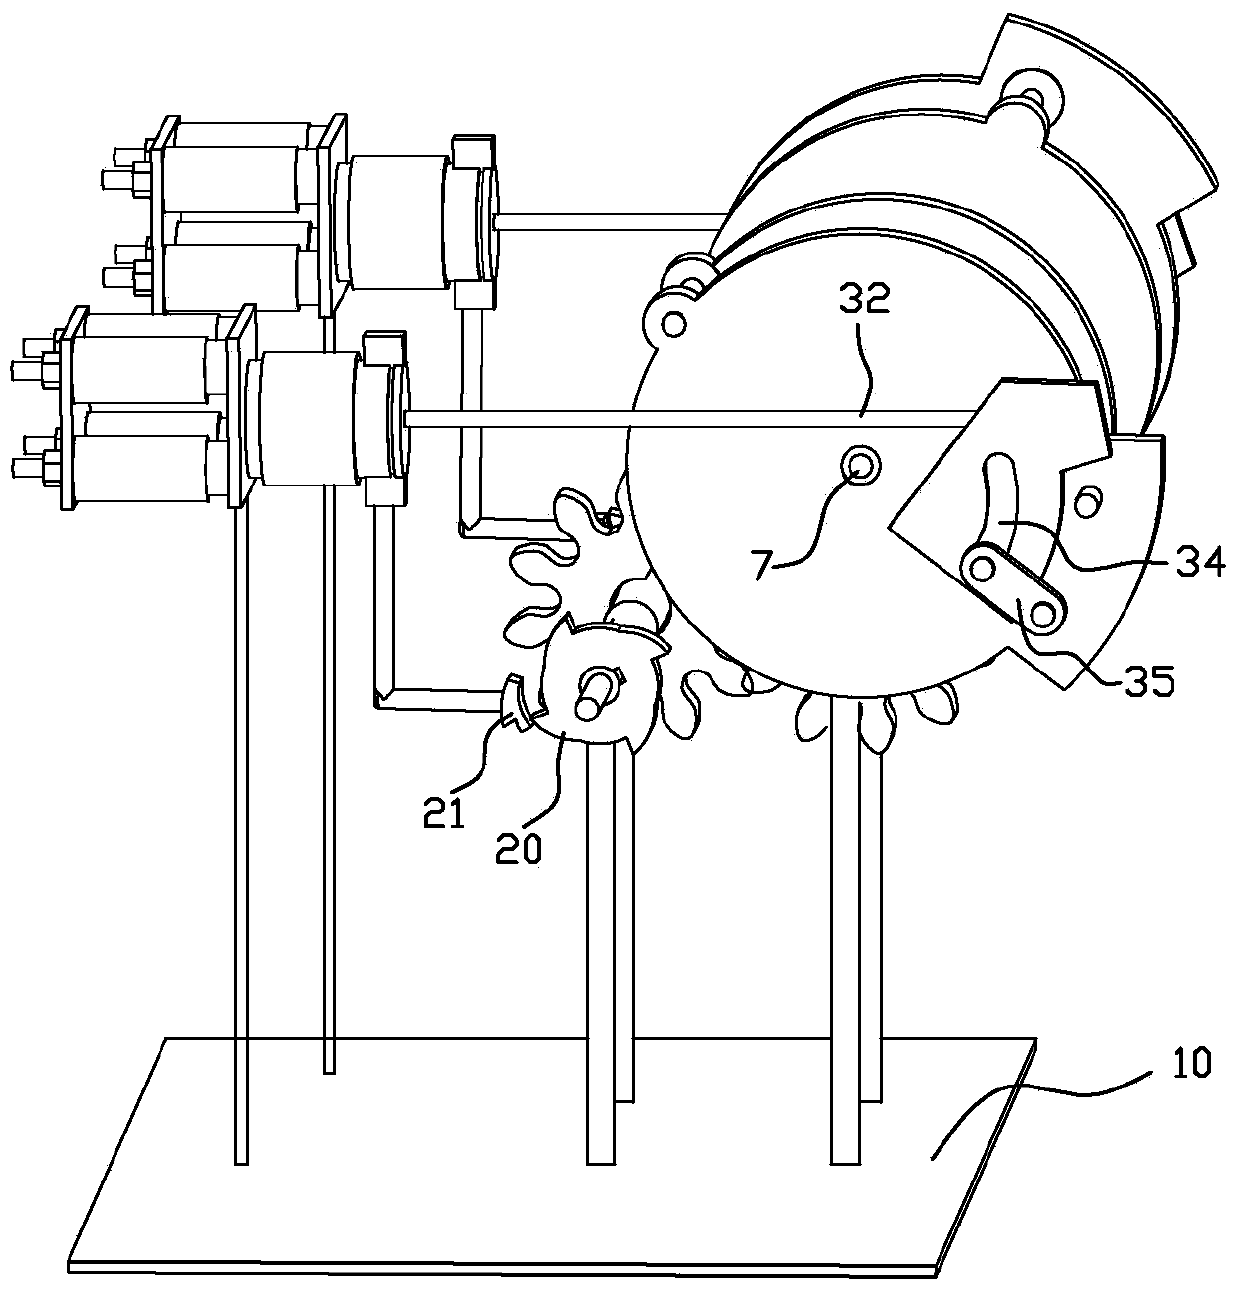 Mechanical transmission device